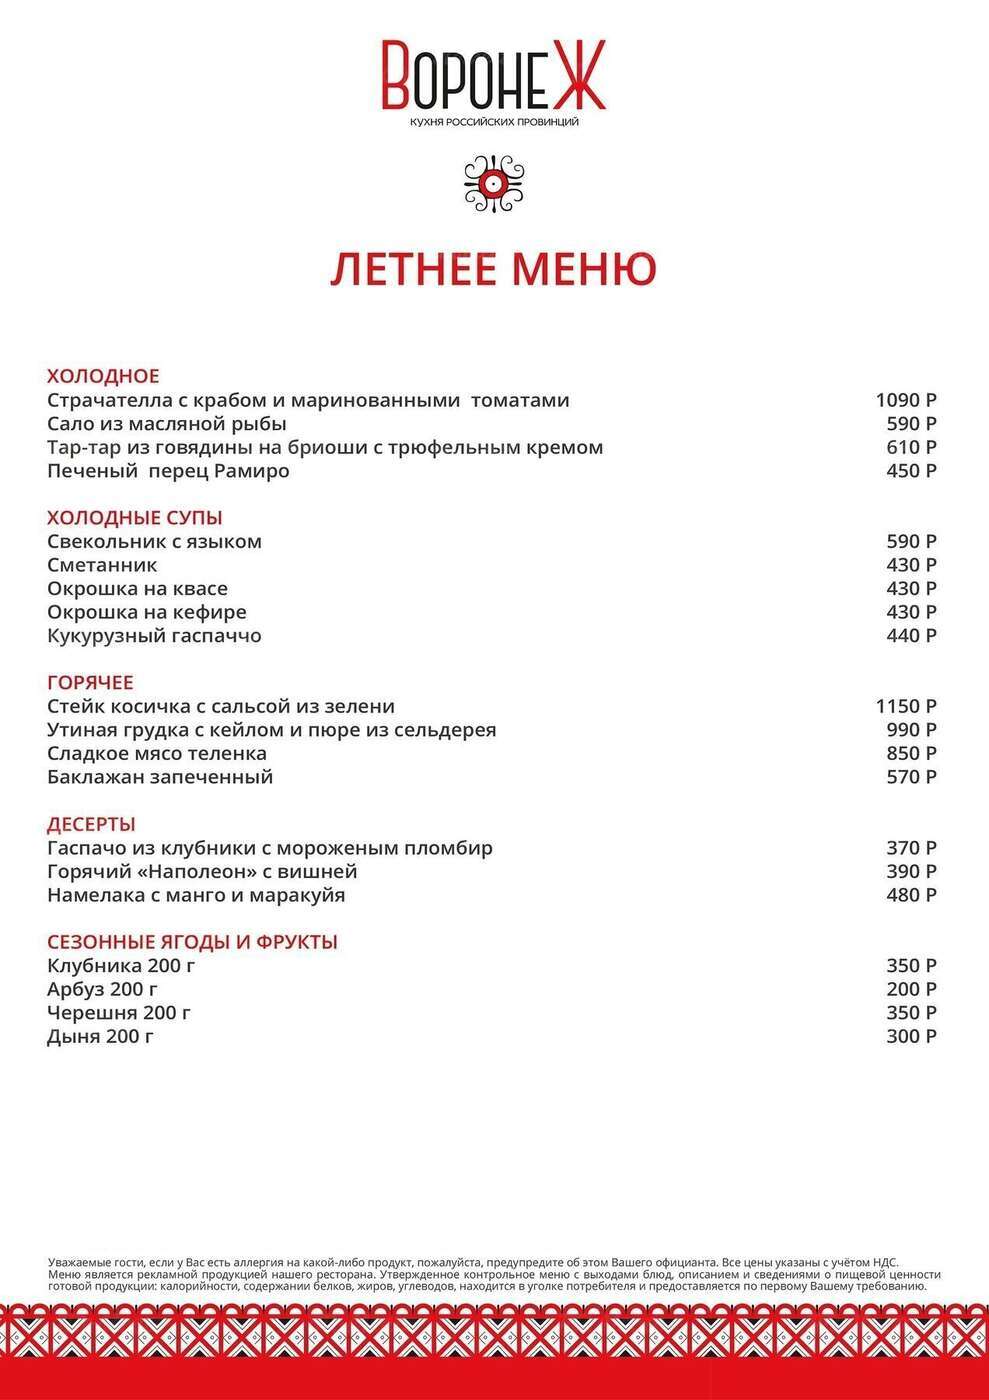 Меню ресторана 1586. Ресторан Воронеж Москва меню.